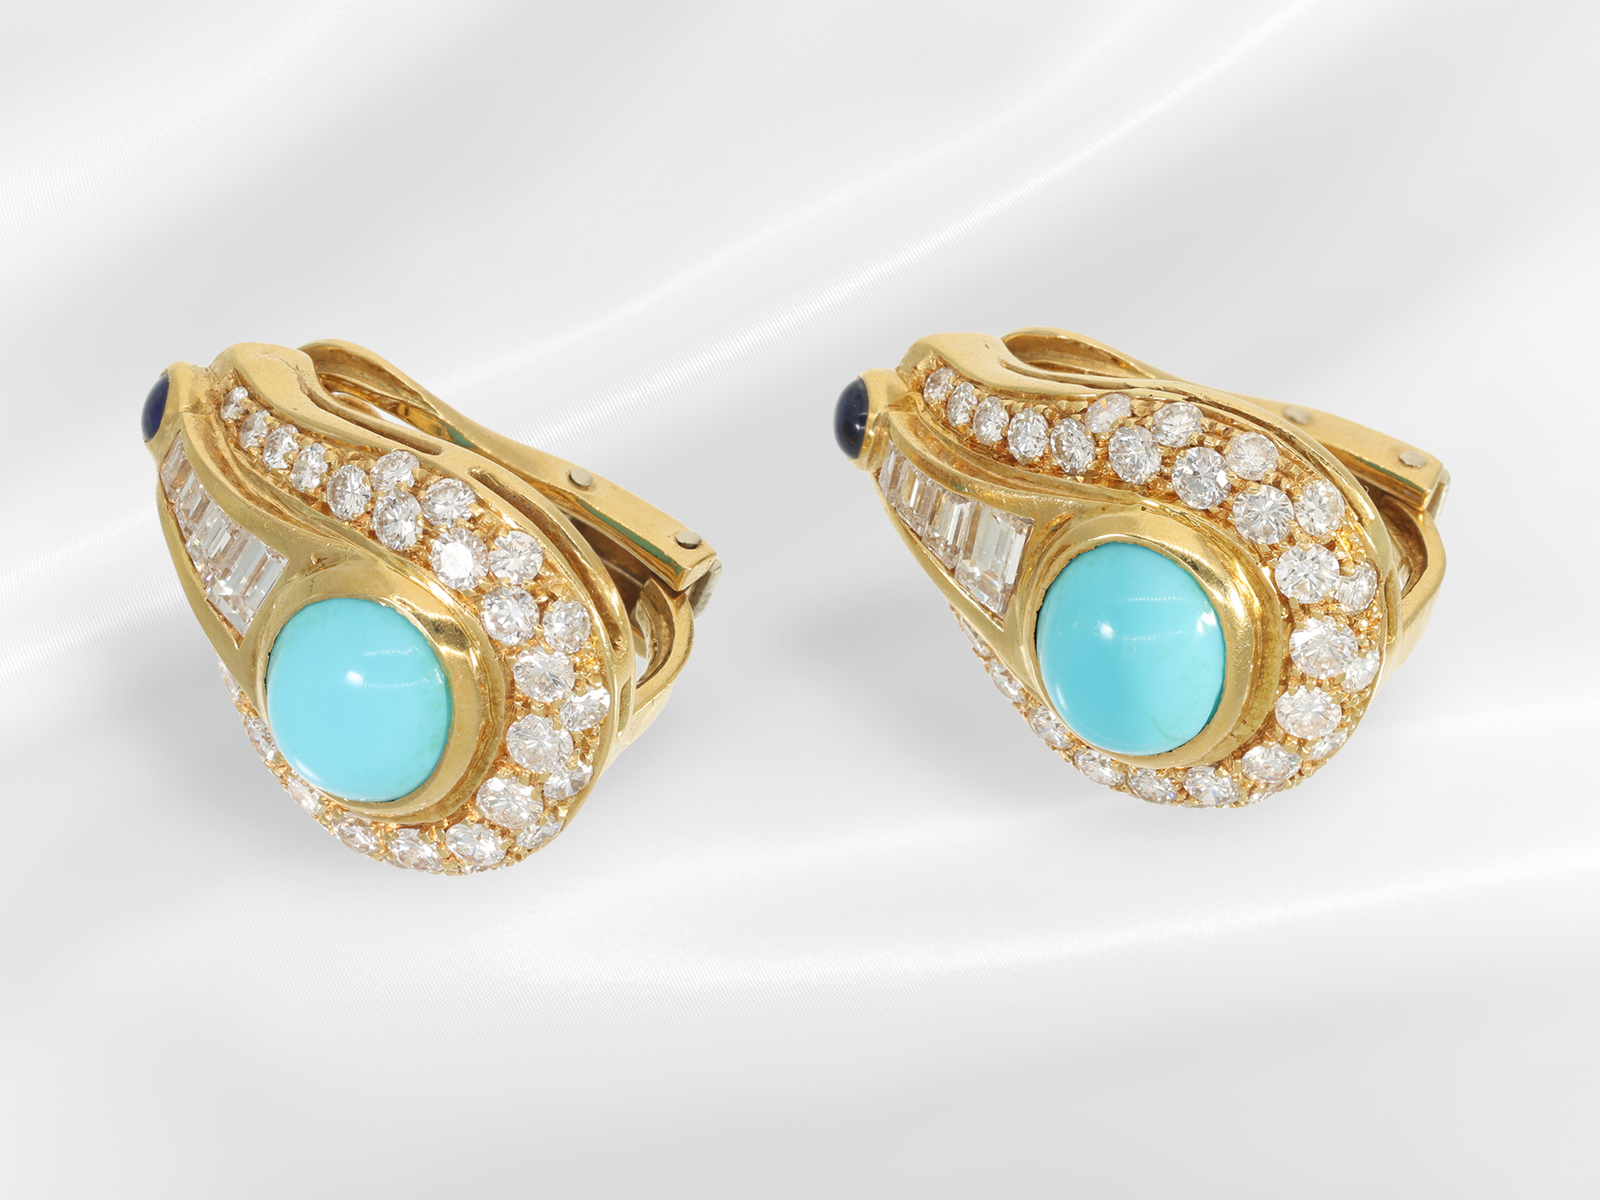 Extremely decorative turquoise/sapphire jewellery set with abundant brilliant-cut diamonds/diamonds, - Image 6 of 7